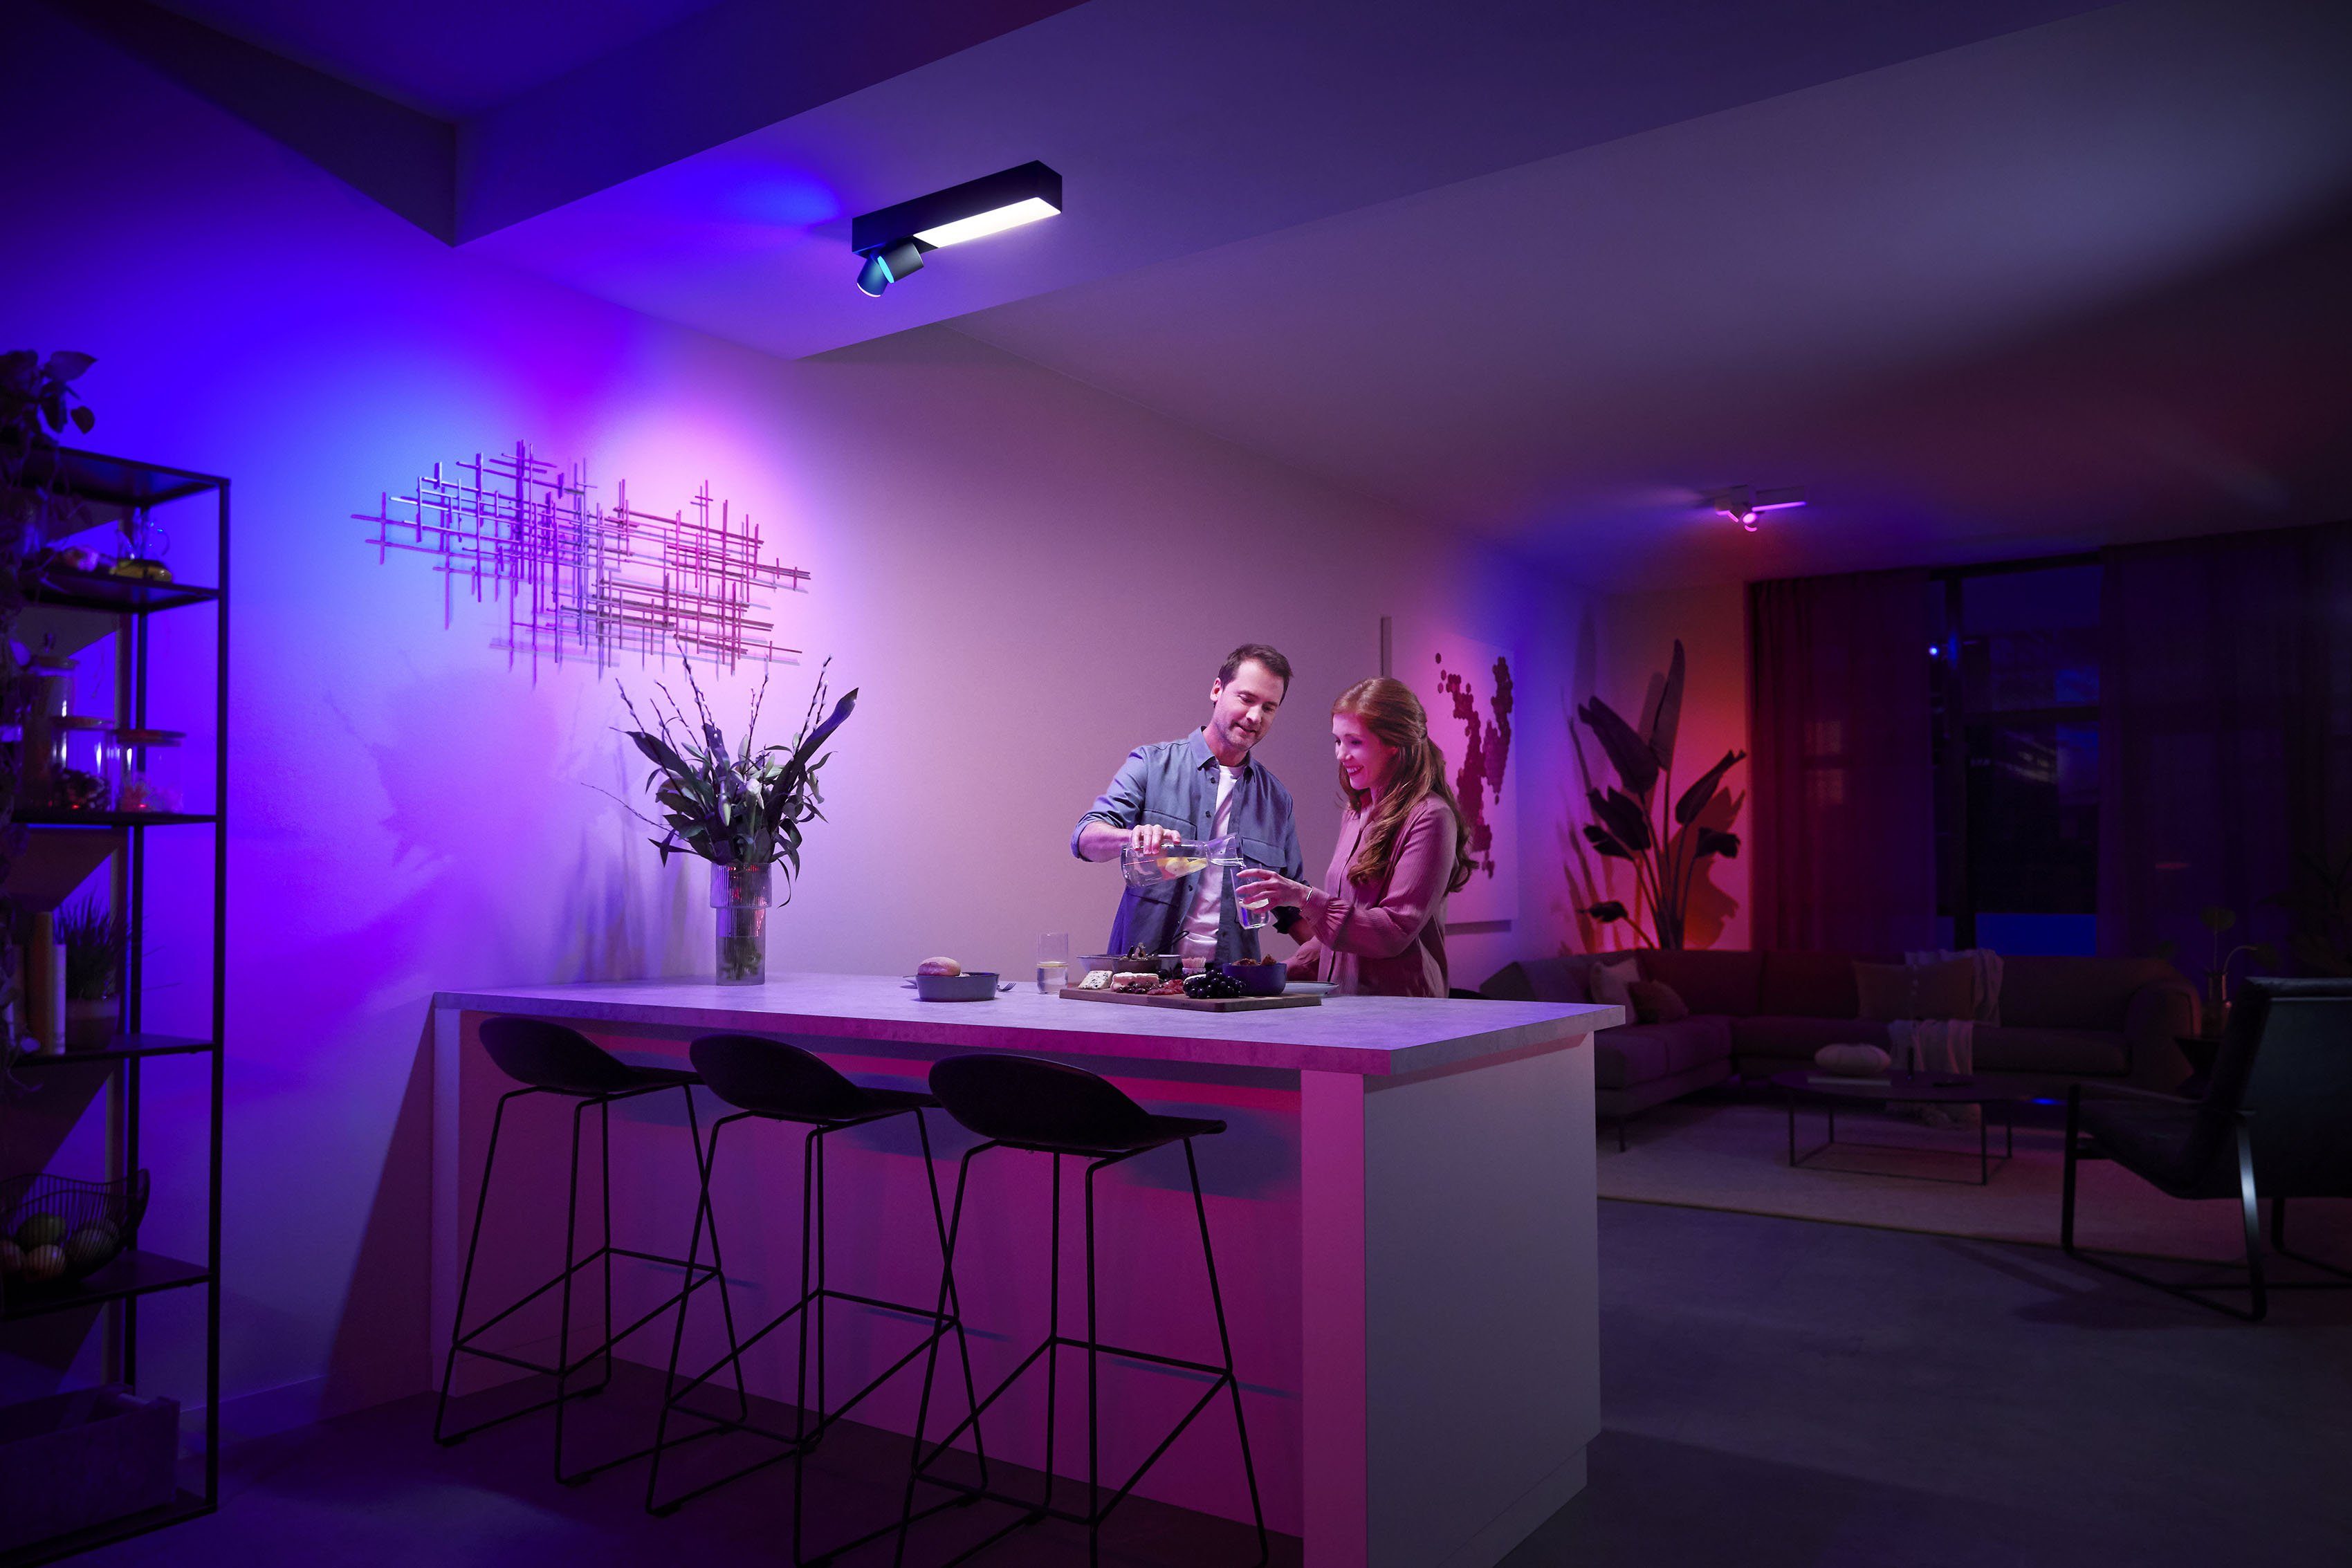 der Individuelle Lampeneinstellungen Centris, LED LED Hue Philips Hue App Deckenspot Farbwechsler, mit wechselbar,